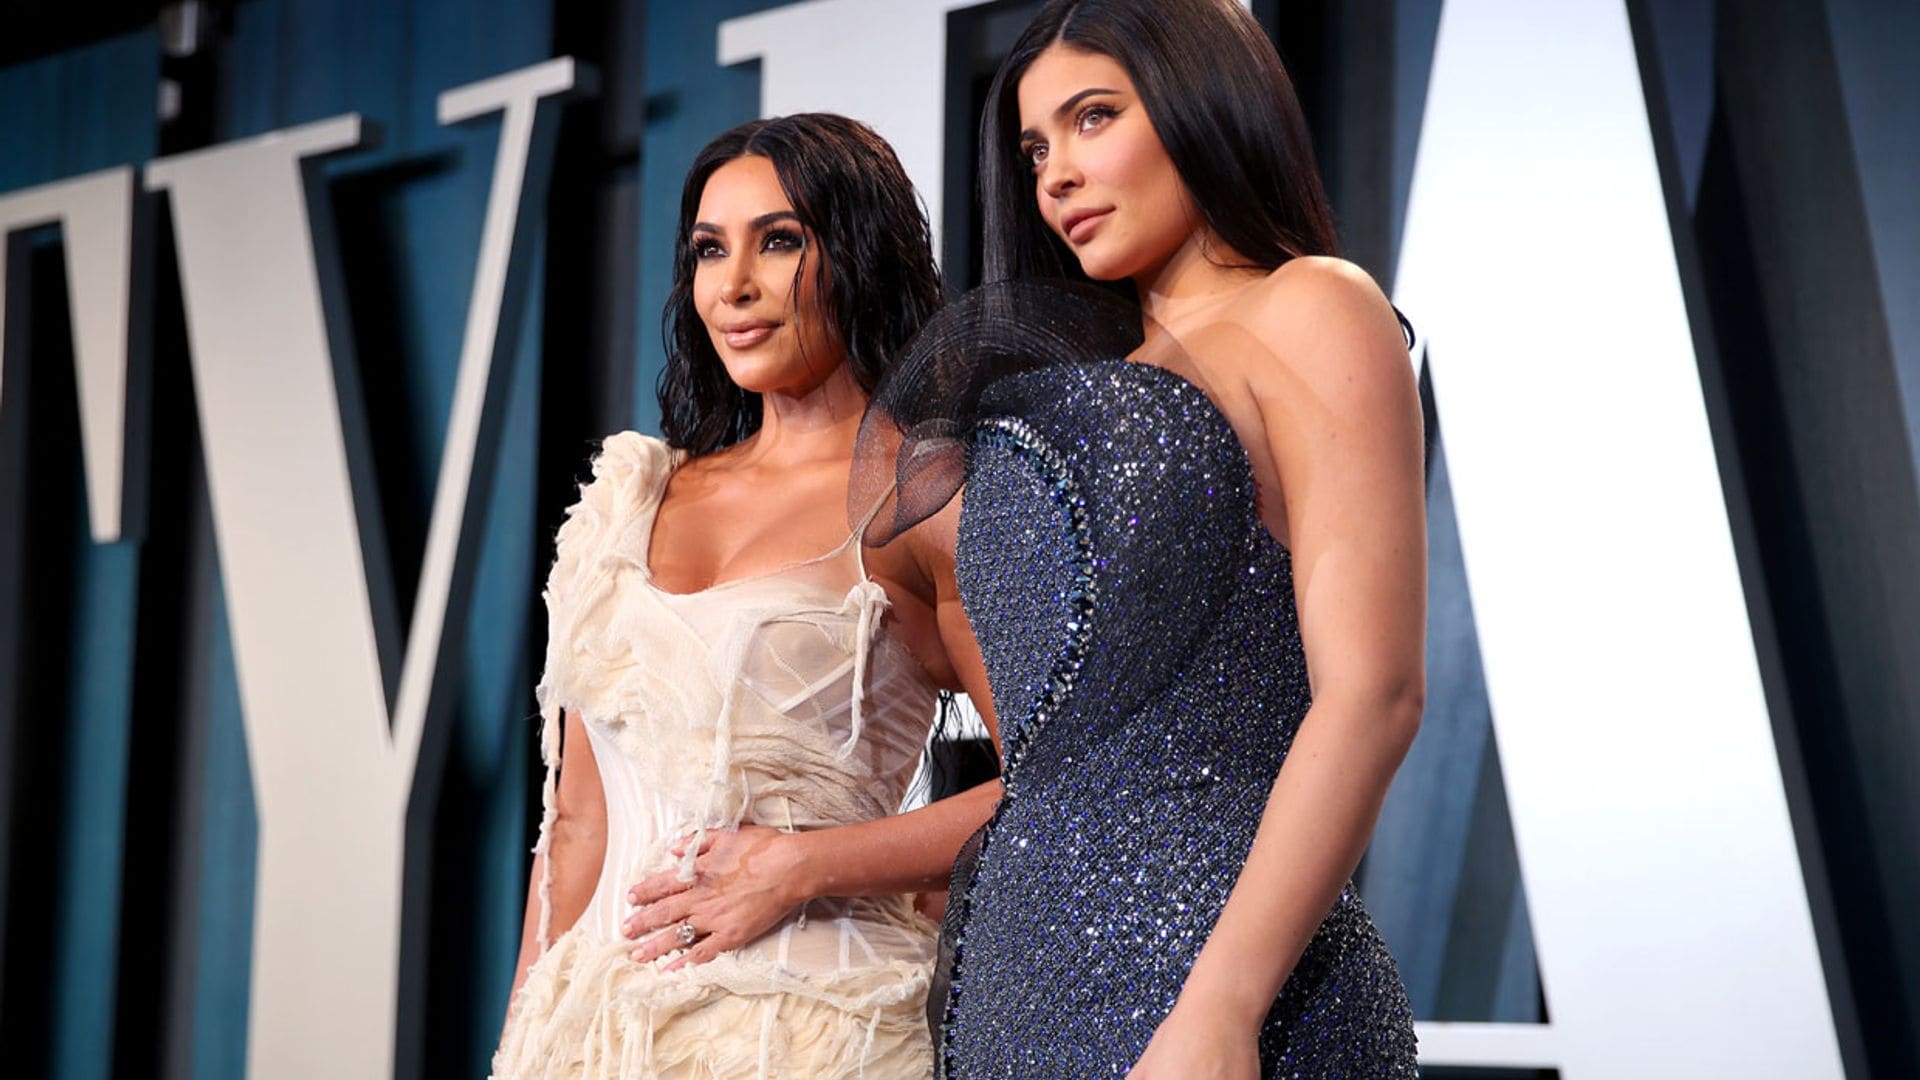 Kylie Jenner seguirá los pasos de Kim Kardashian con un exclusivo proyecto que no esperábamos